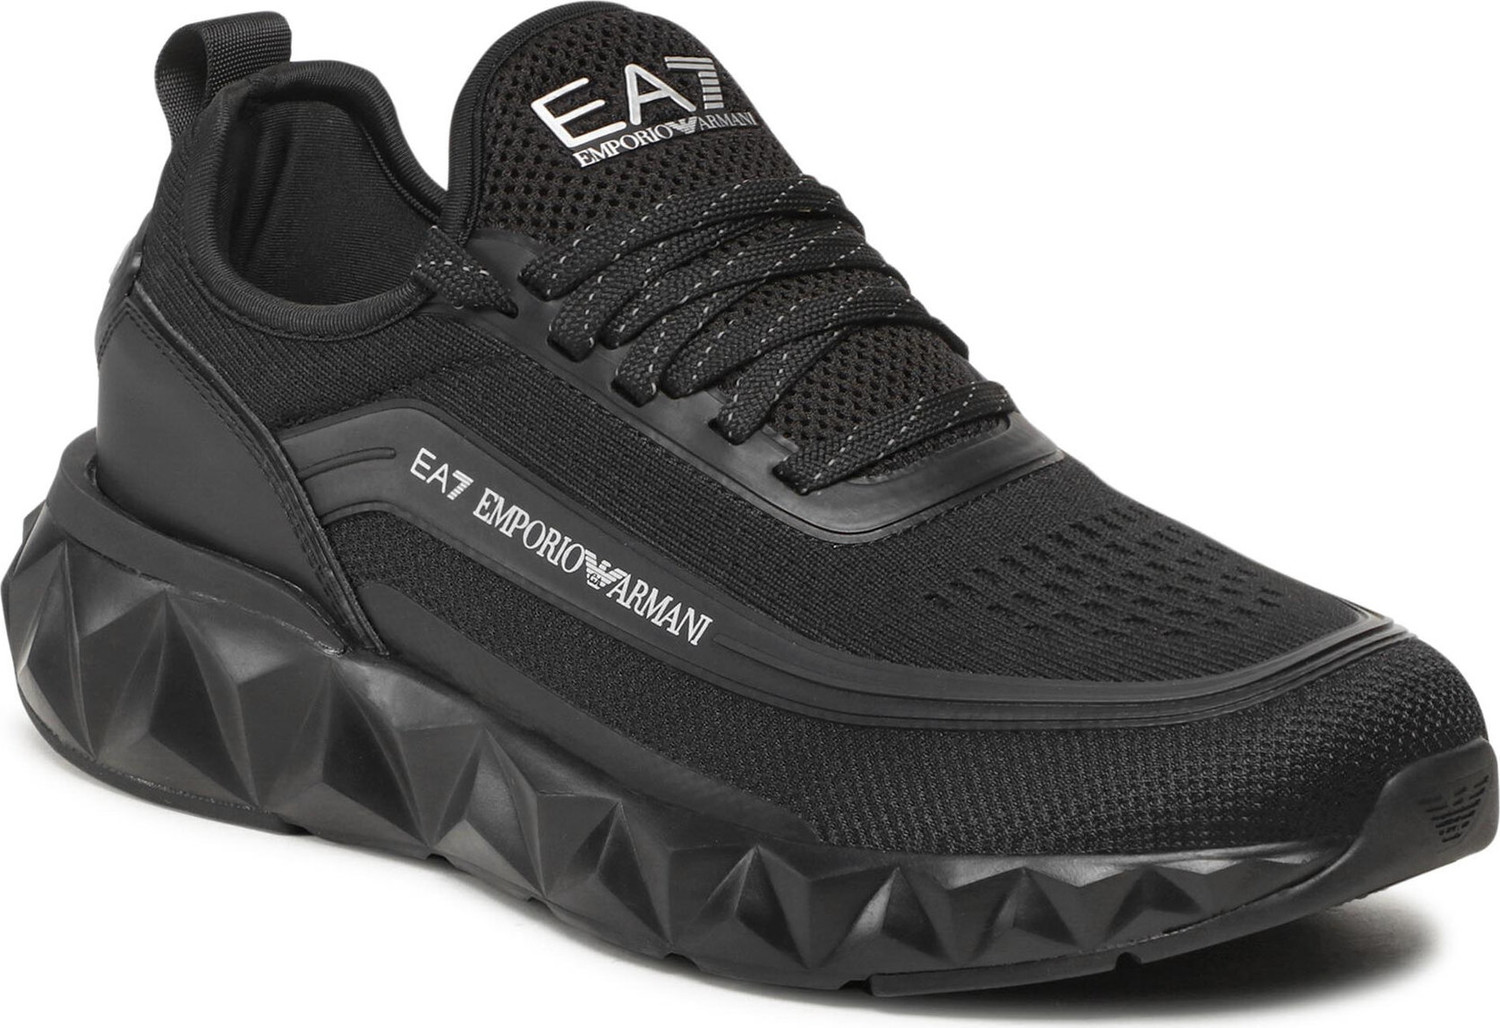 Sneakersy EA7 Emporio Armani X8X106 XK262 N763 Black/Silver